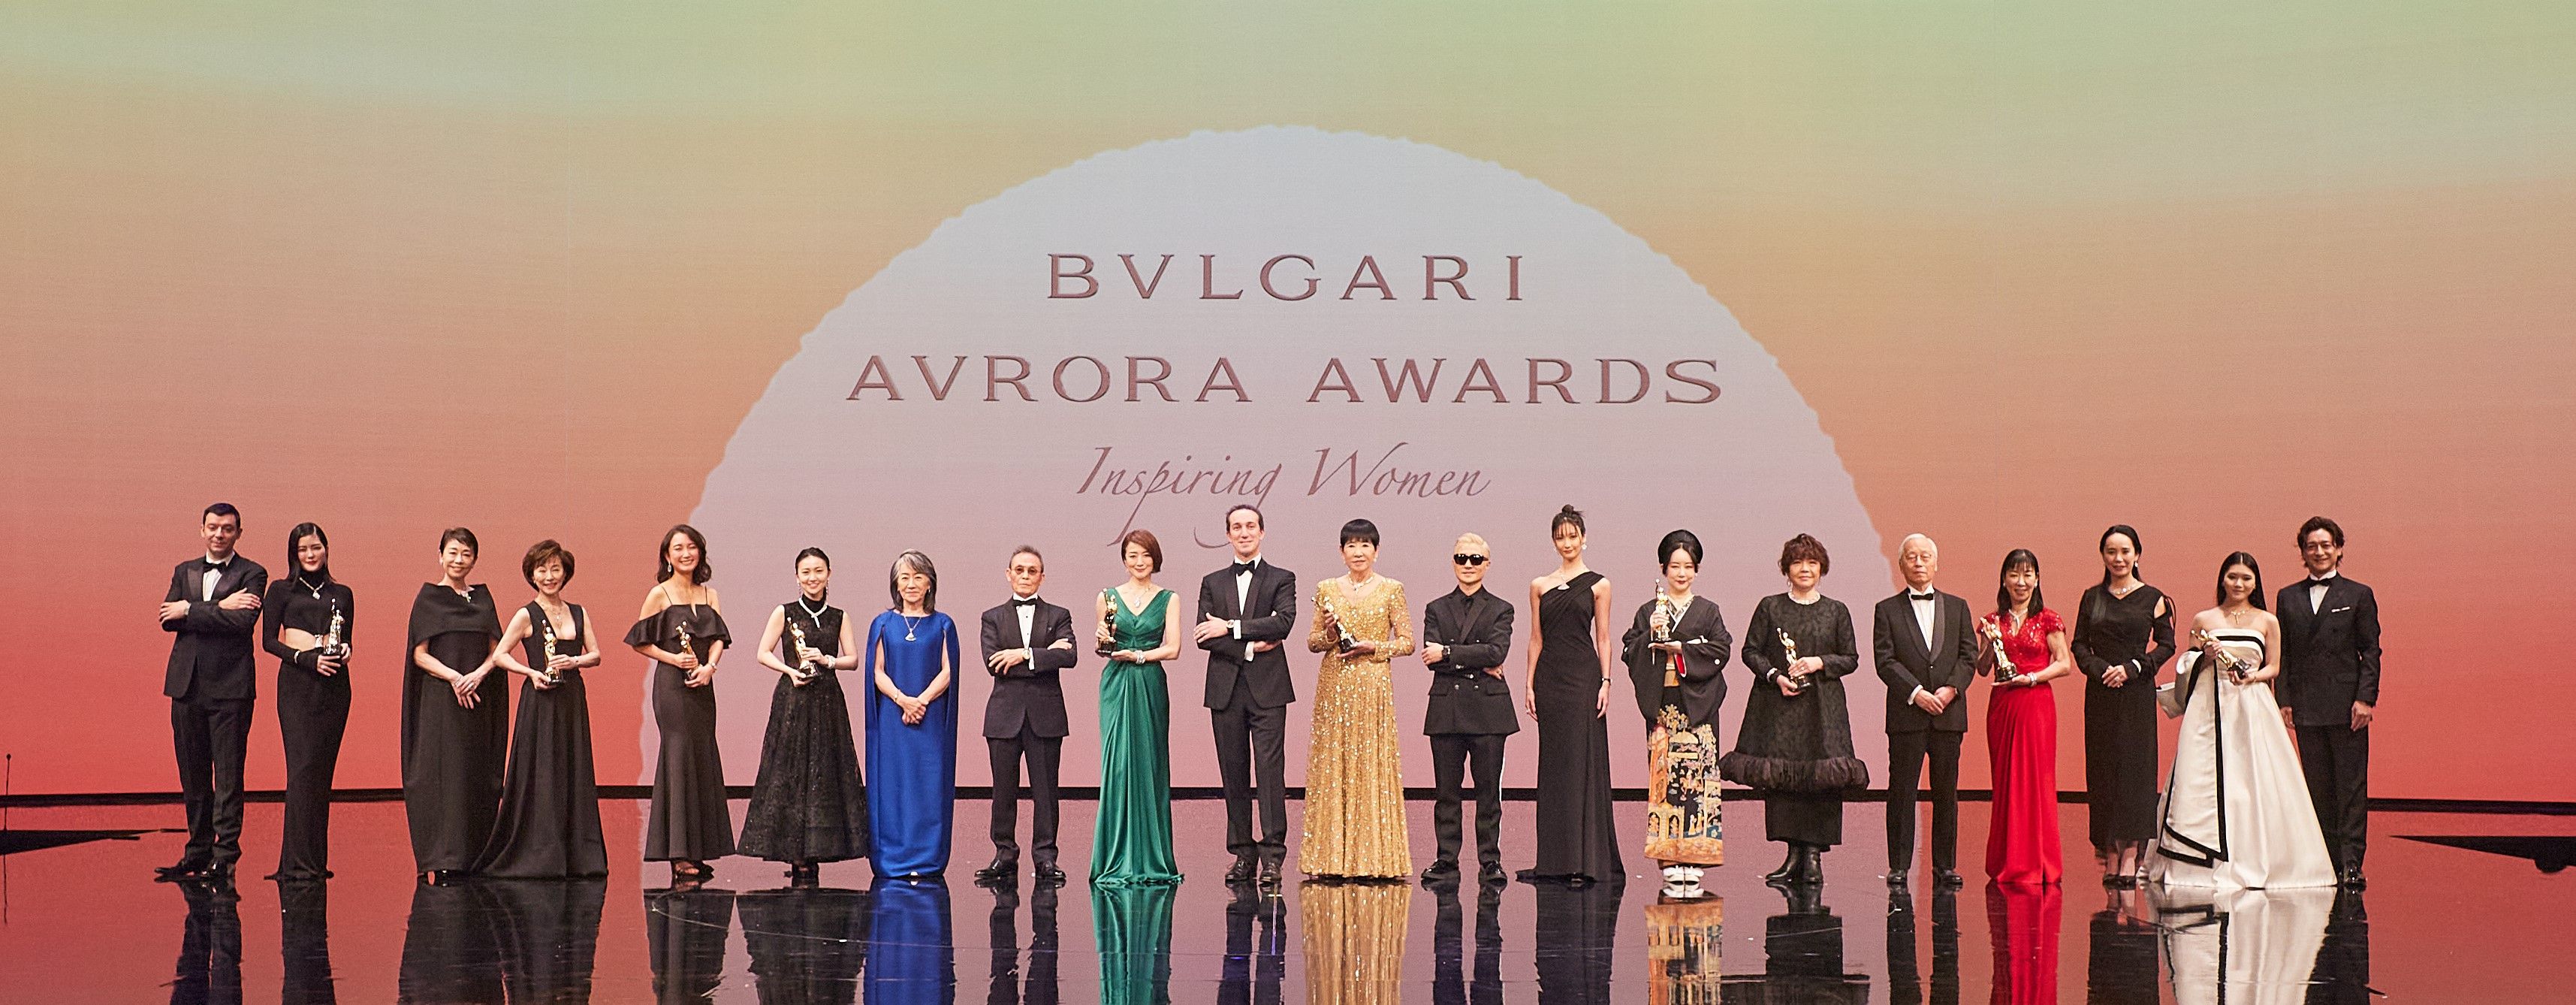 Bvlgari Avrora Awards 21が開催 鈴木京香 和田アキ子 伊藤詩織ら10名が受賞 ハーパーズ バザー Harper S Bazaar 公式